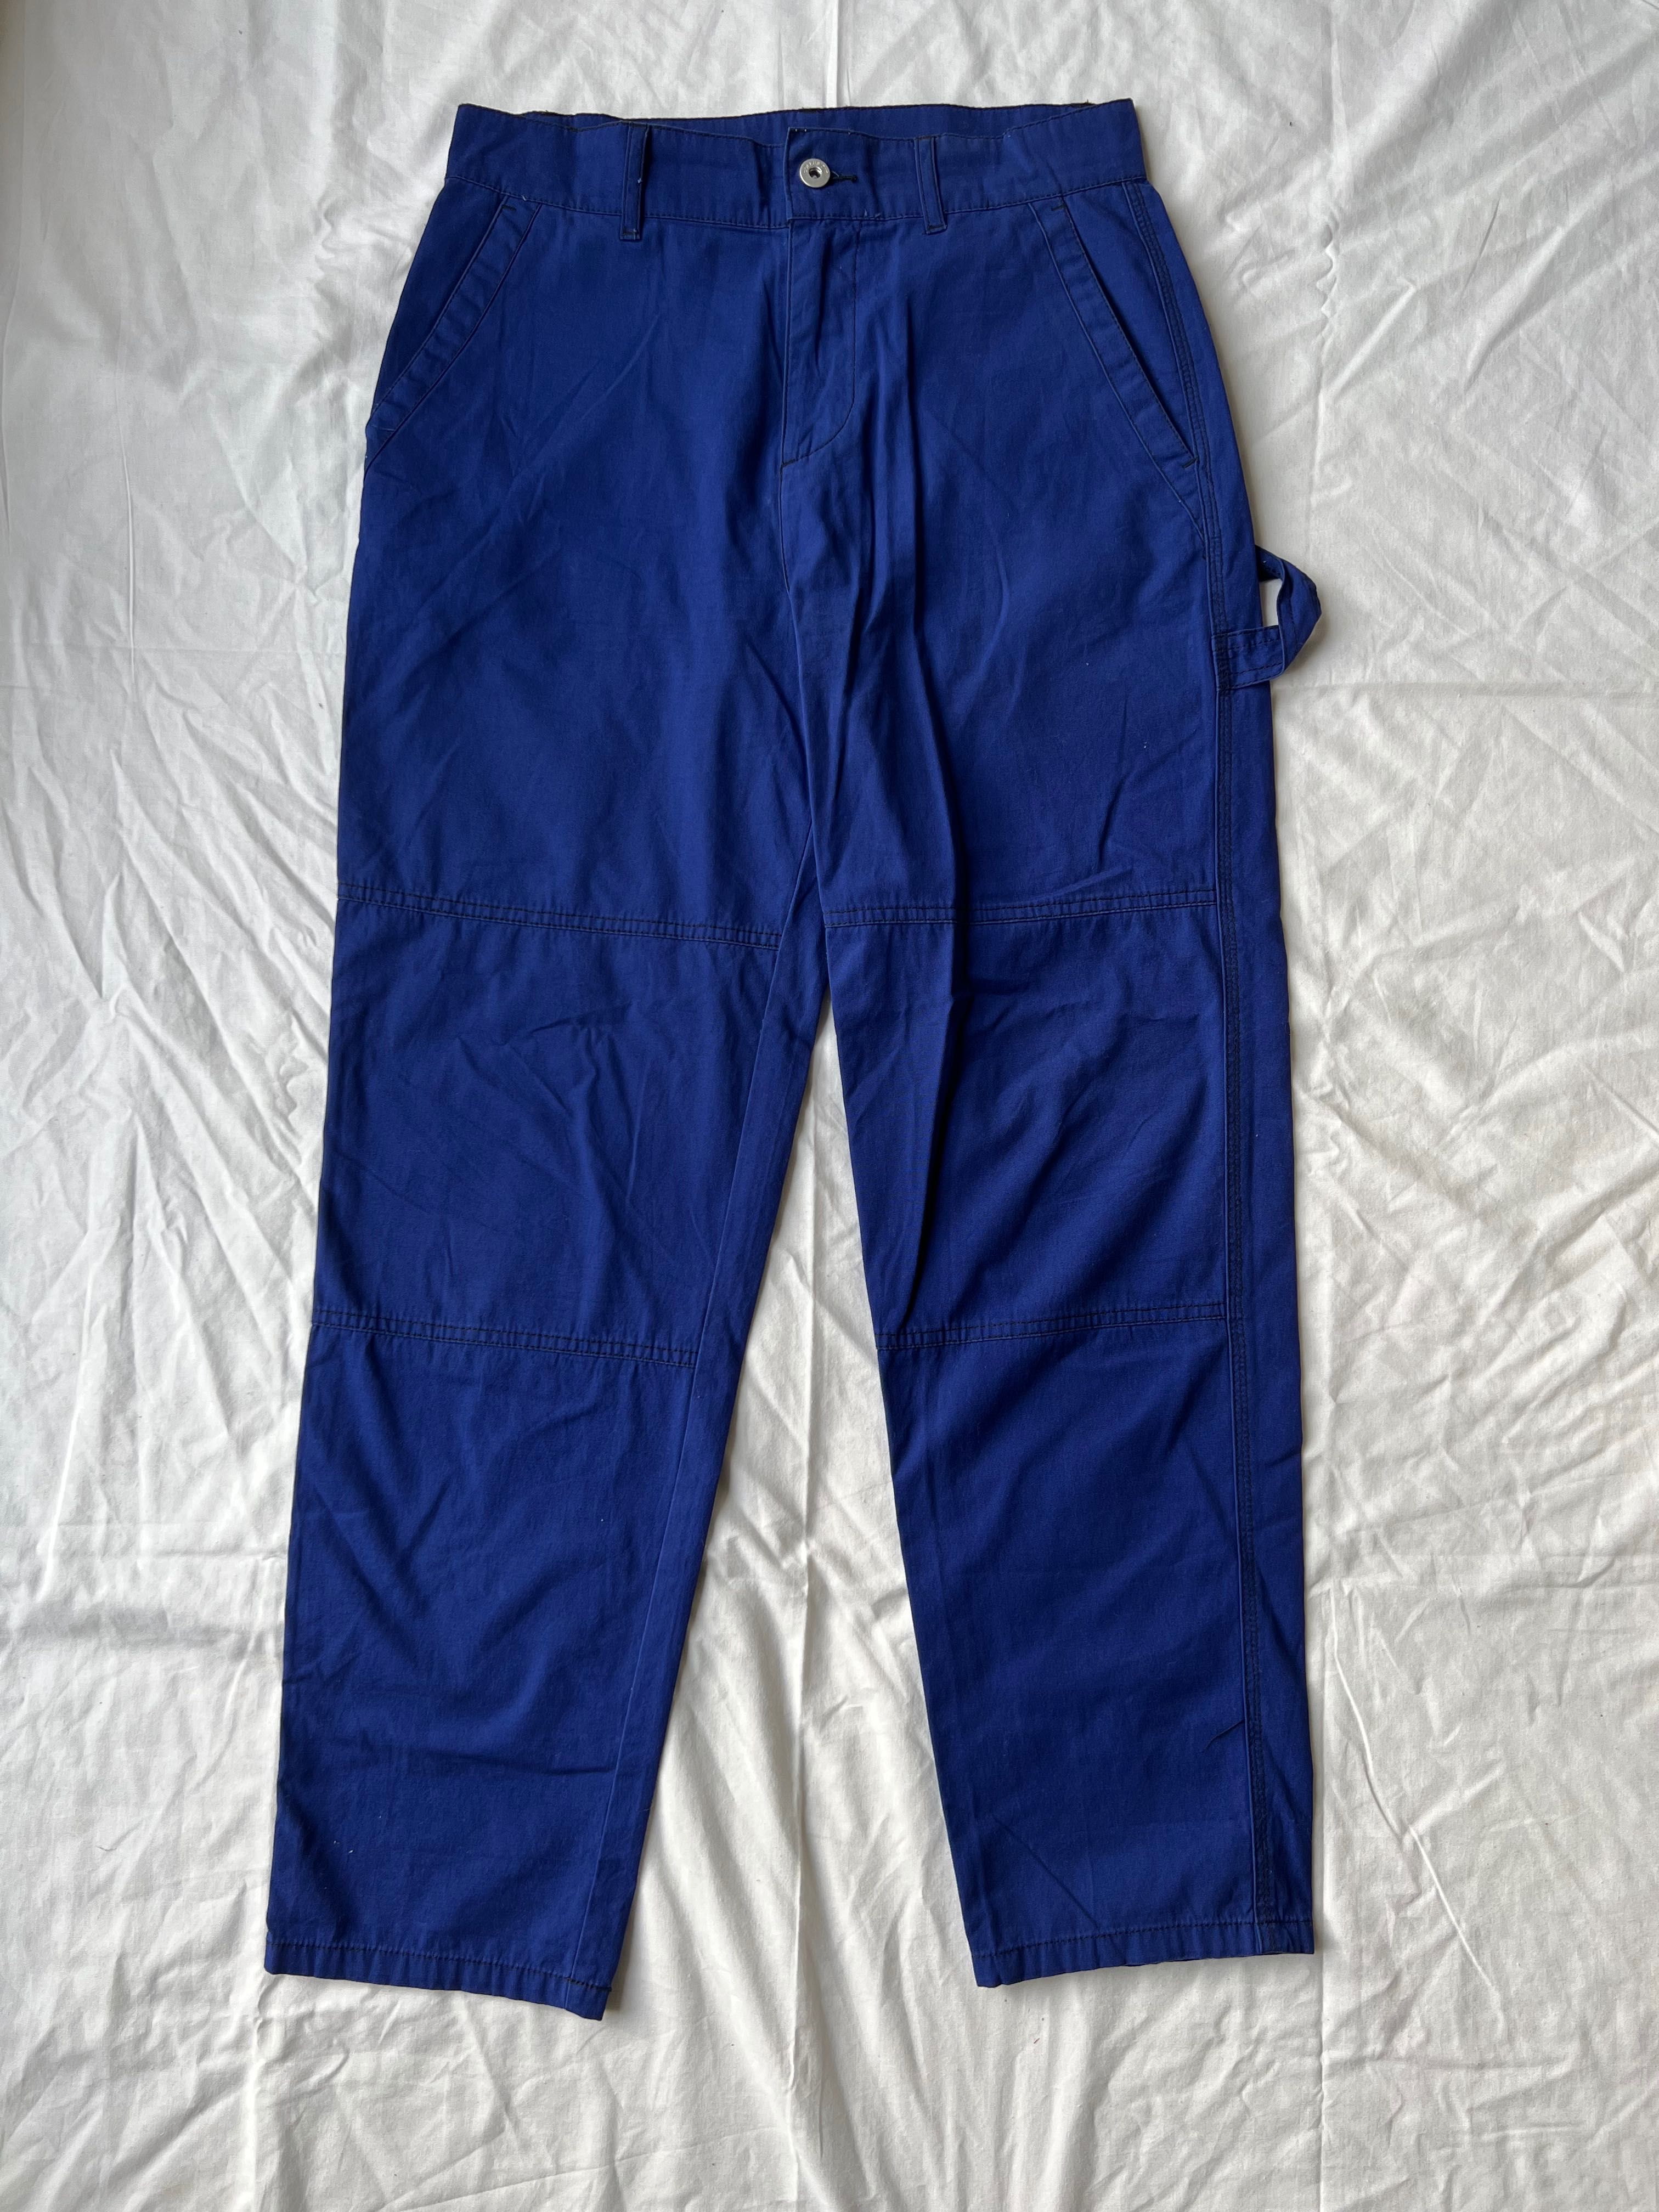 Asos Collusion spodnie ciemno niebieskie W28L32